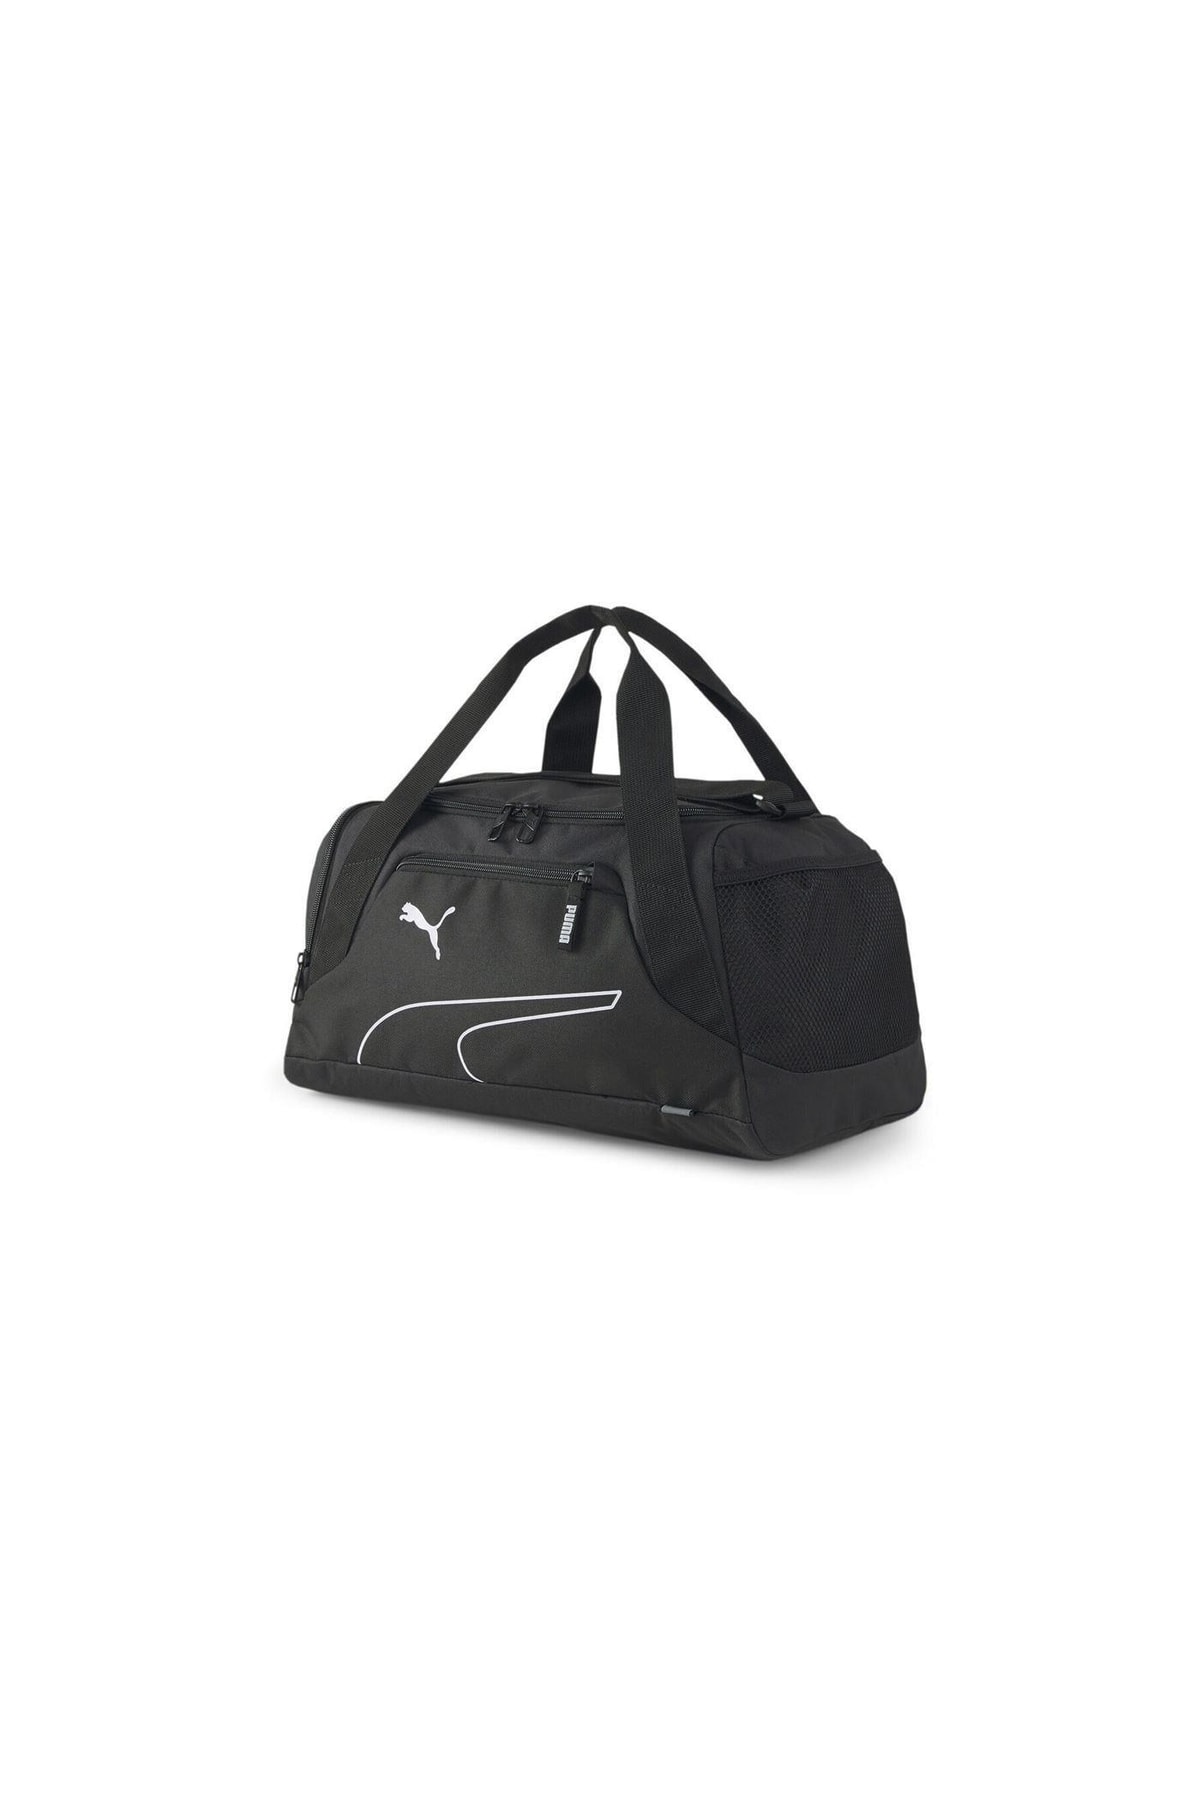 Puma Fundamentals Sports Bag 079231 Siyah Spor Çanta